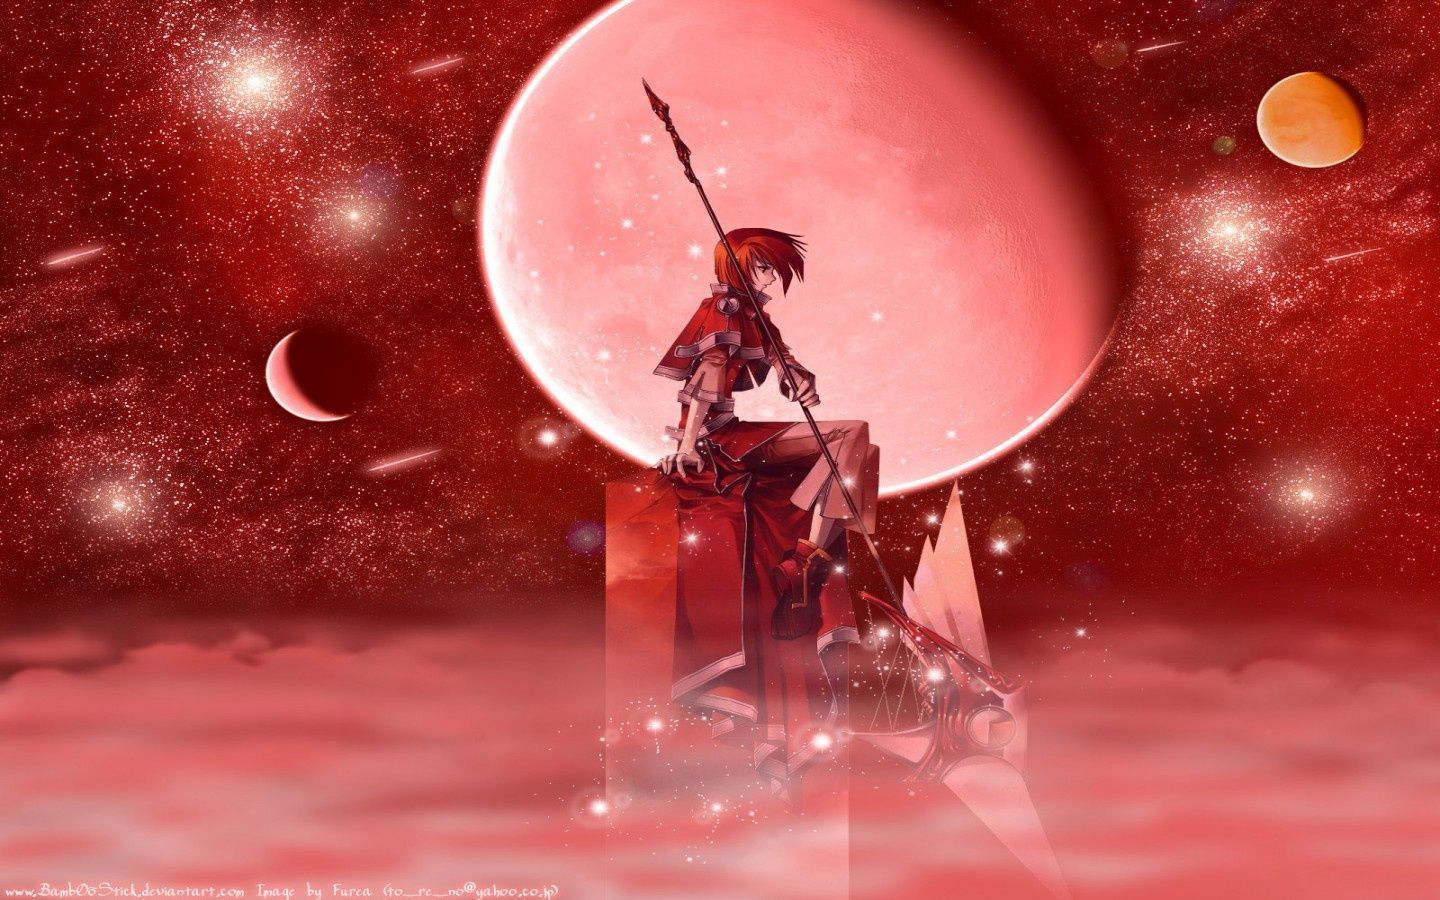 HD wallpaper sora no kiseki renne red moon akatsuki Anime arts  culture and entertainment  Wallpaper Flare